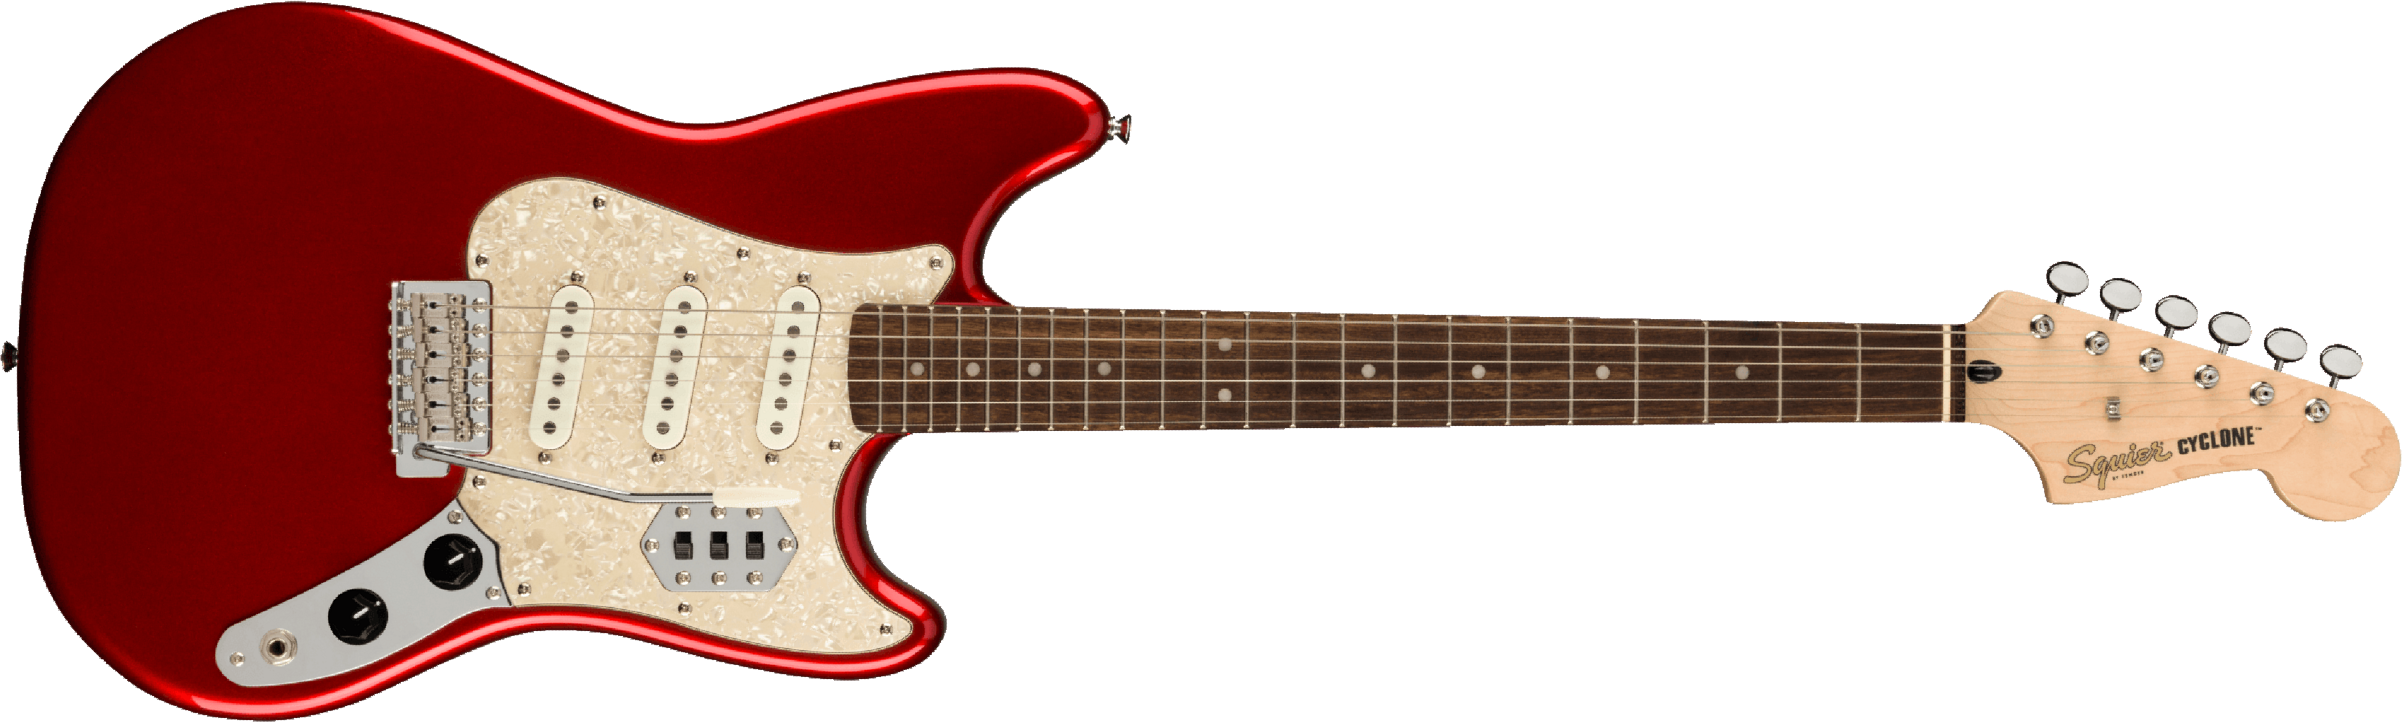 Squier Cyclone Paranormal 3s Trem Lau - Candy Apple Red - Retro-rock elektrische gitaar - Main picture